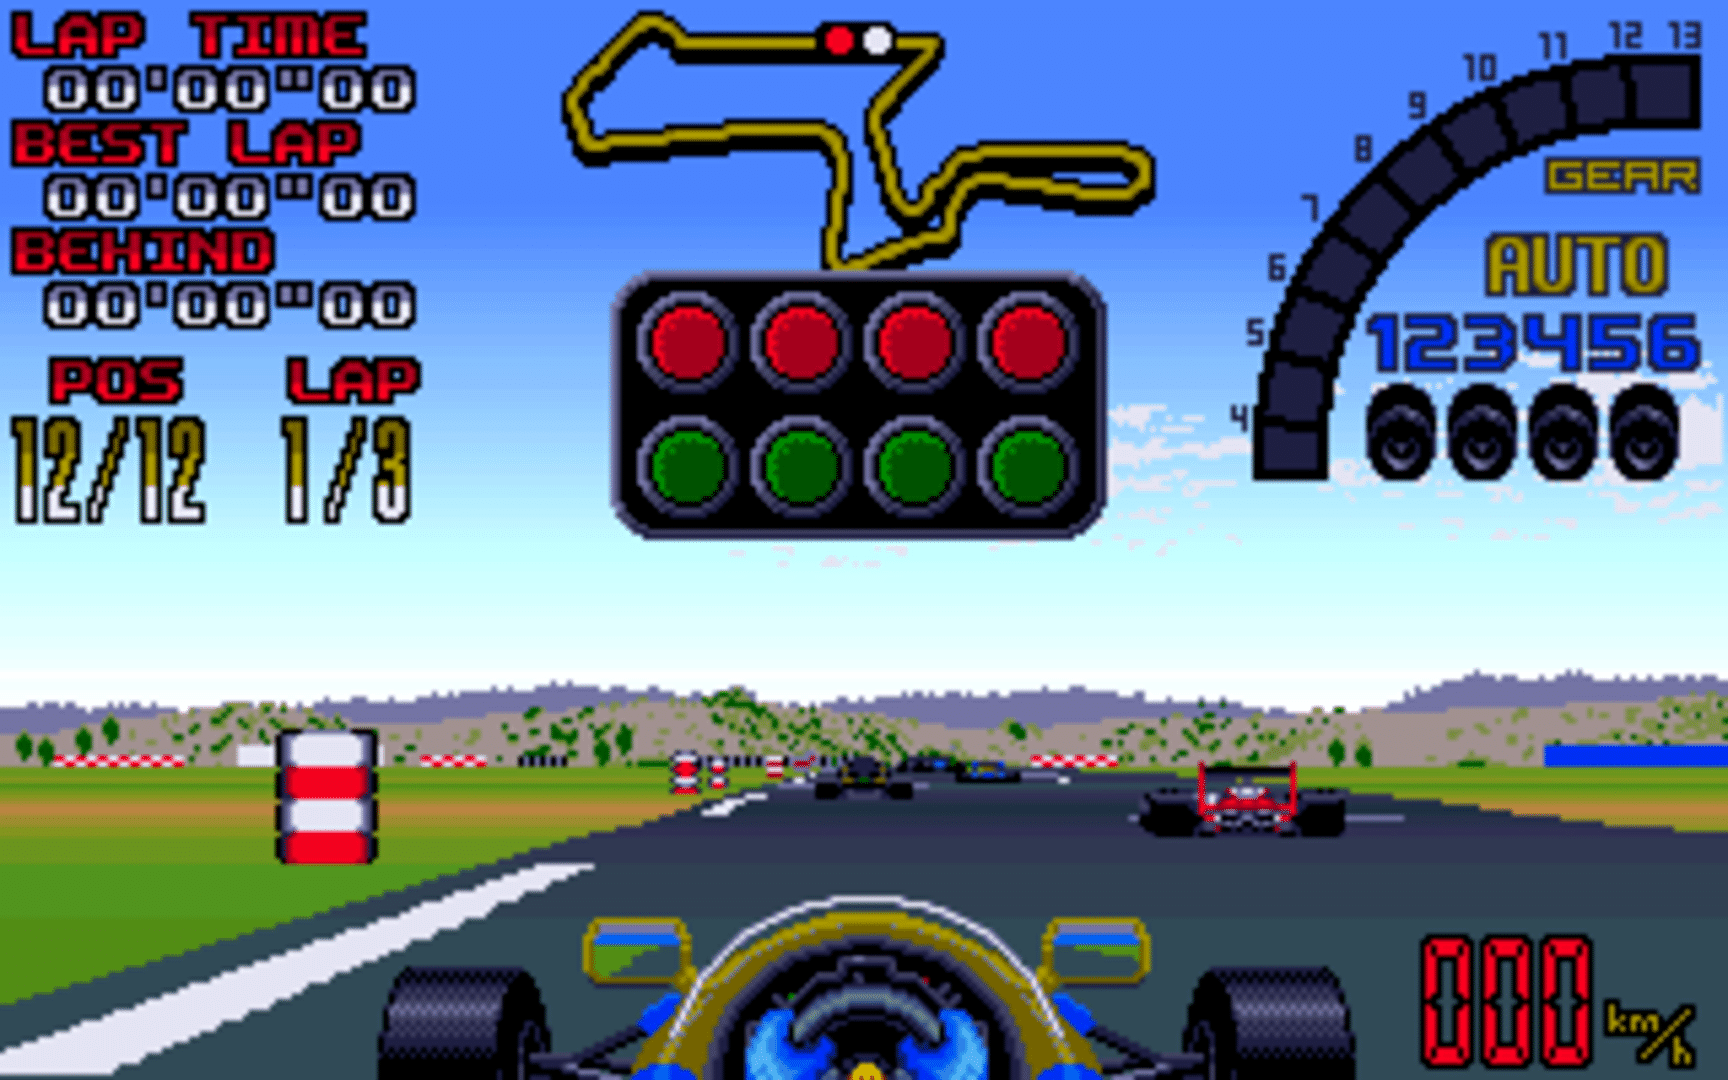 Nigel Mansell's World Championship screenshot